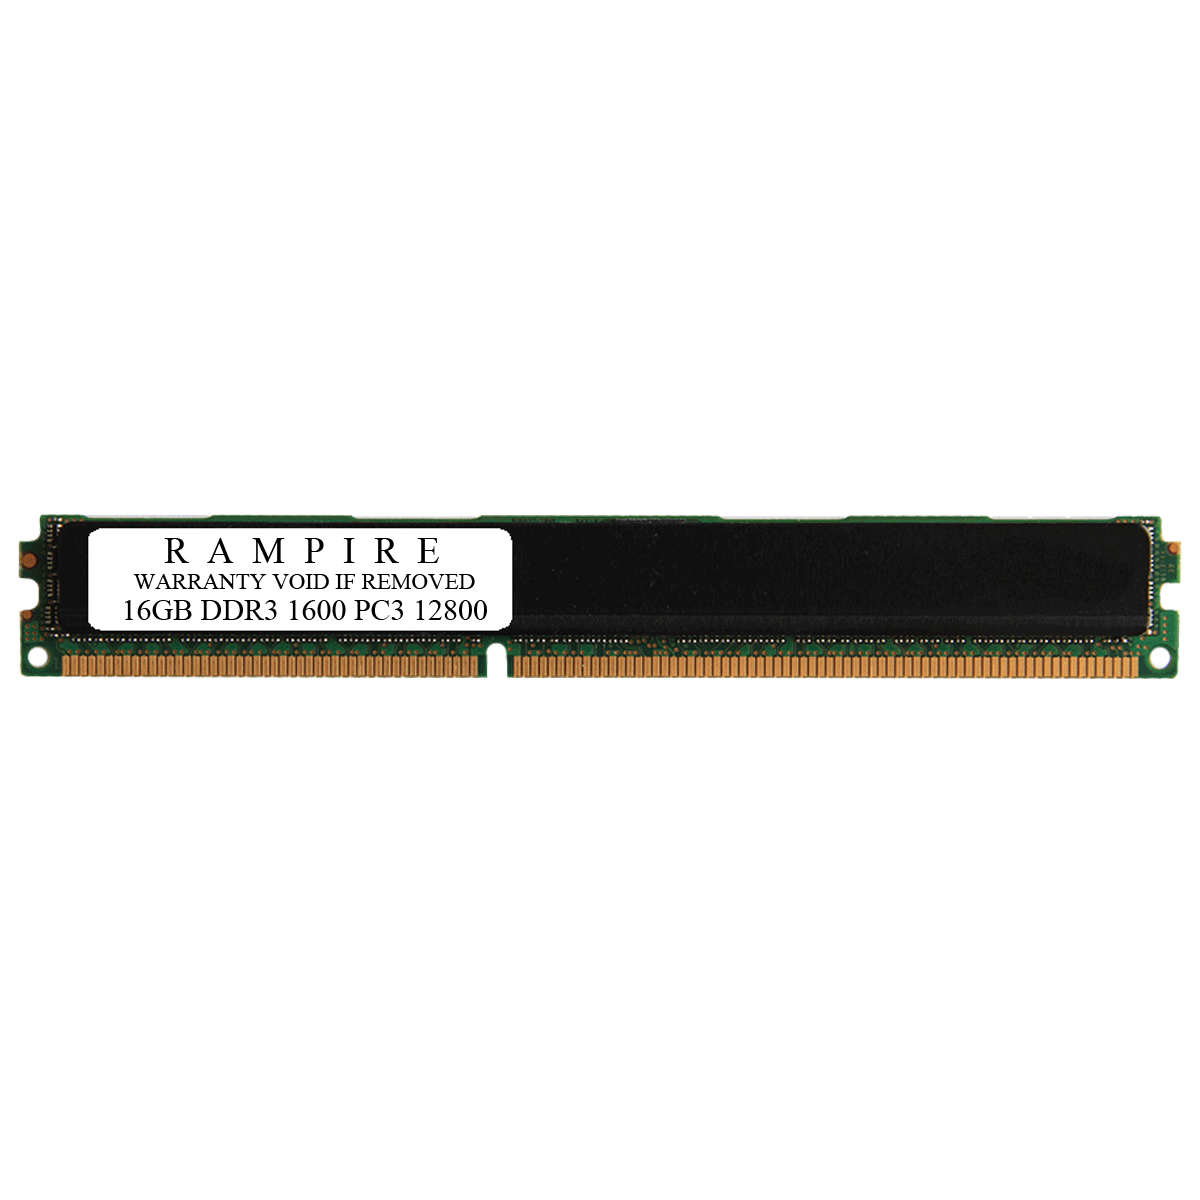 RAMPIRE 16GB DDR3 1600 (PC3 12800) 240-Pin SDRAM 2Rx4 VLP (Low Profile) 1.5V ECC Registered Server Memory